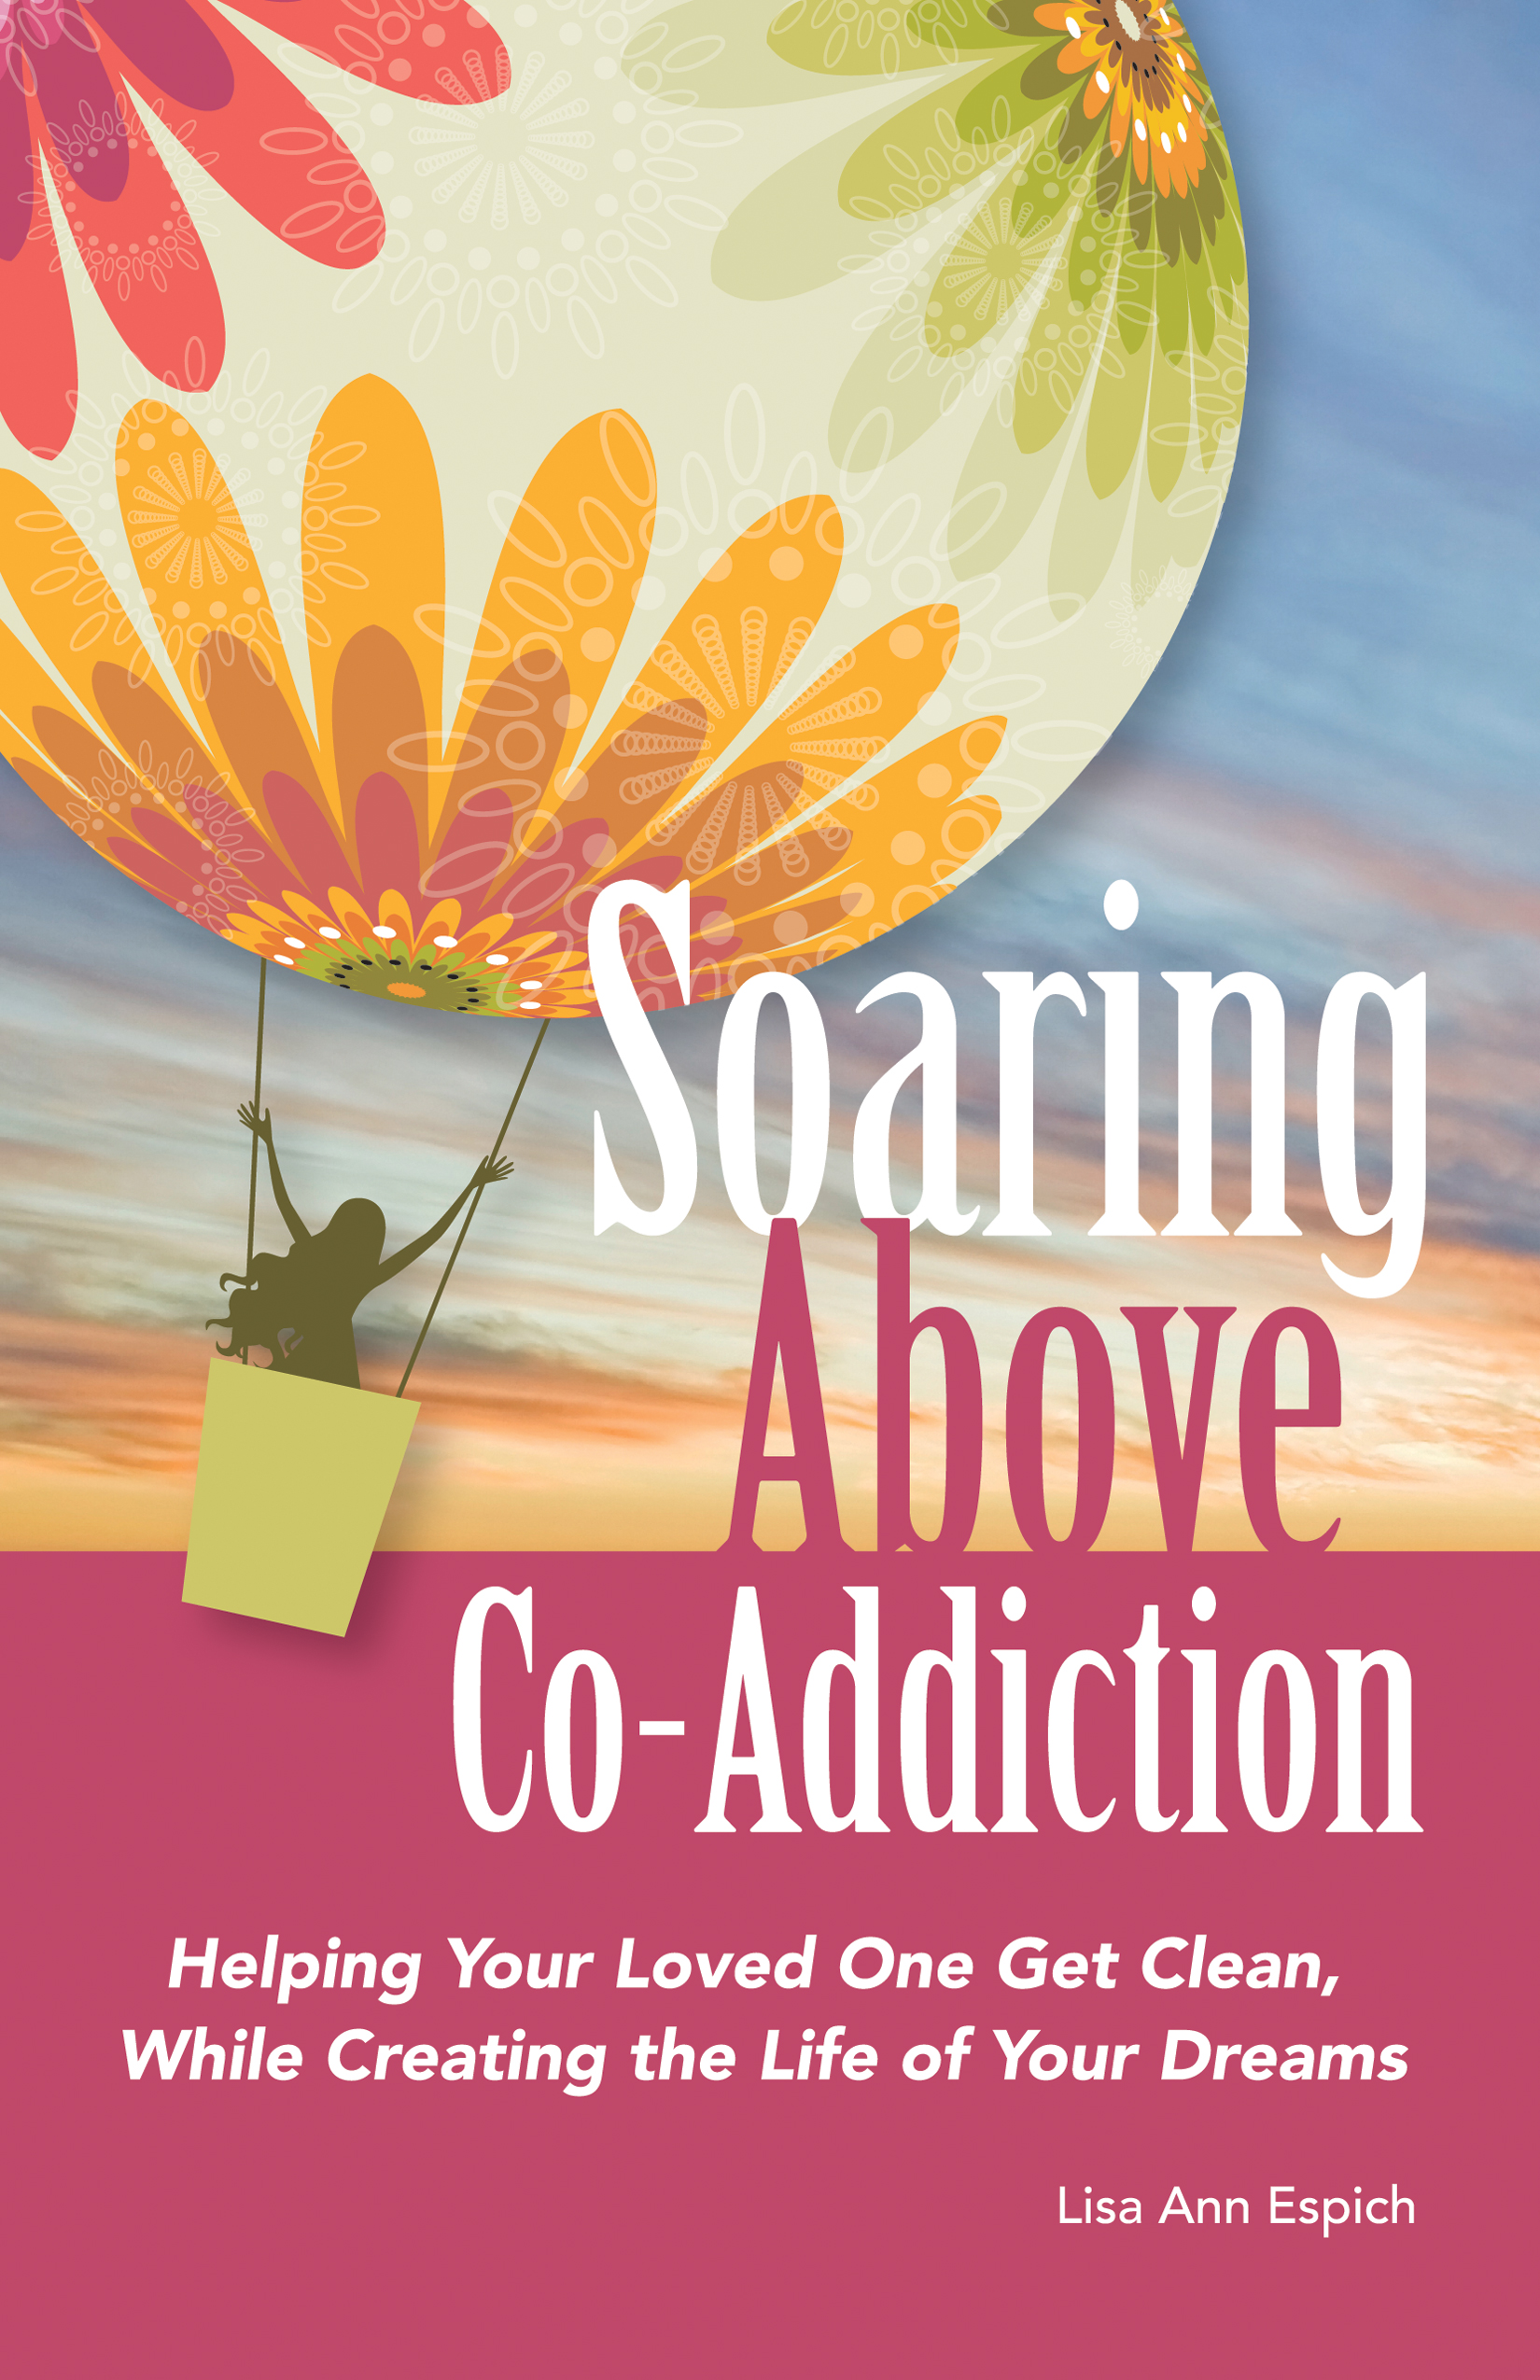 Soaring Above Co-Addiction